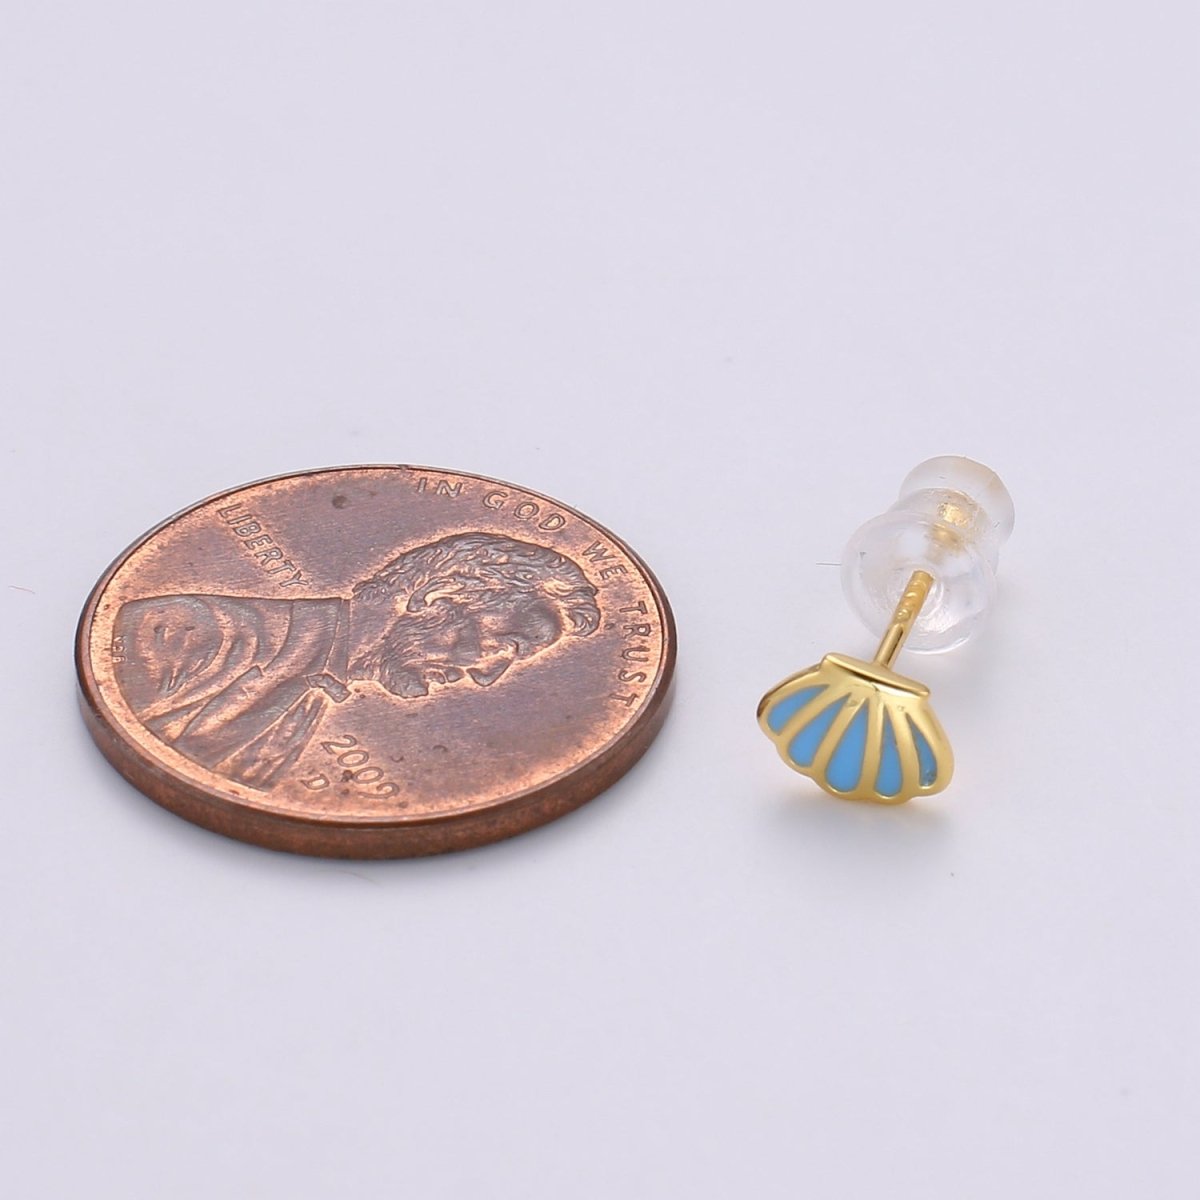 Dainty Gold Shell Stud Earrings, Gold Stud, Silver Stud, Gold Earring Minimalist Ocean Beach Design for gift Q-376 Q-377 - DLUXCA